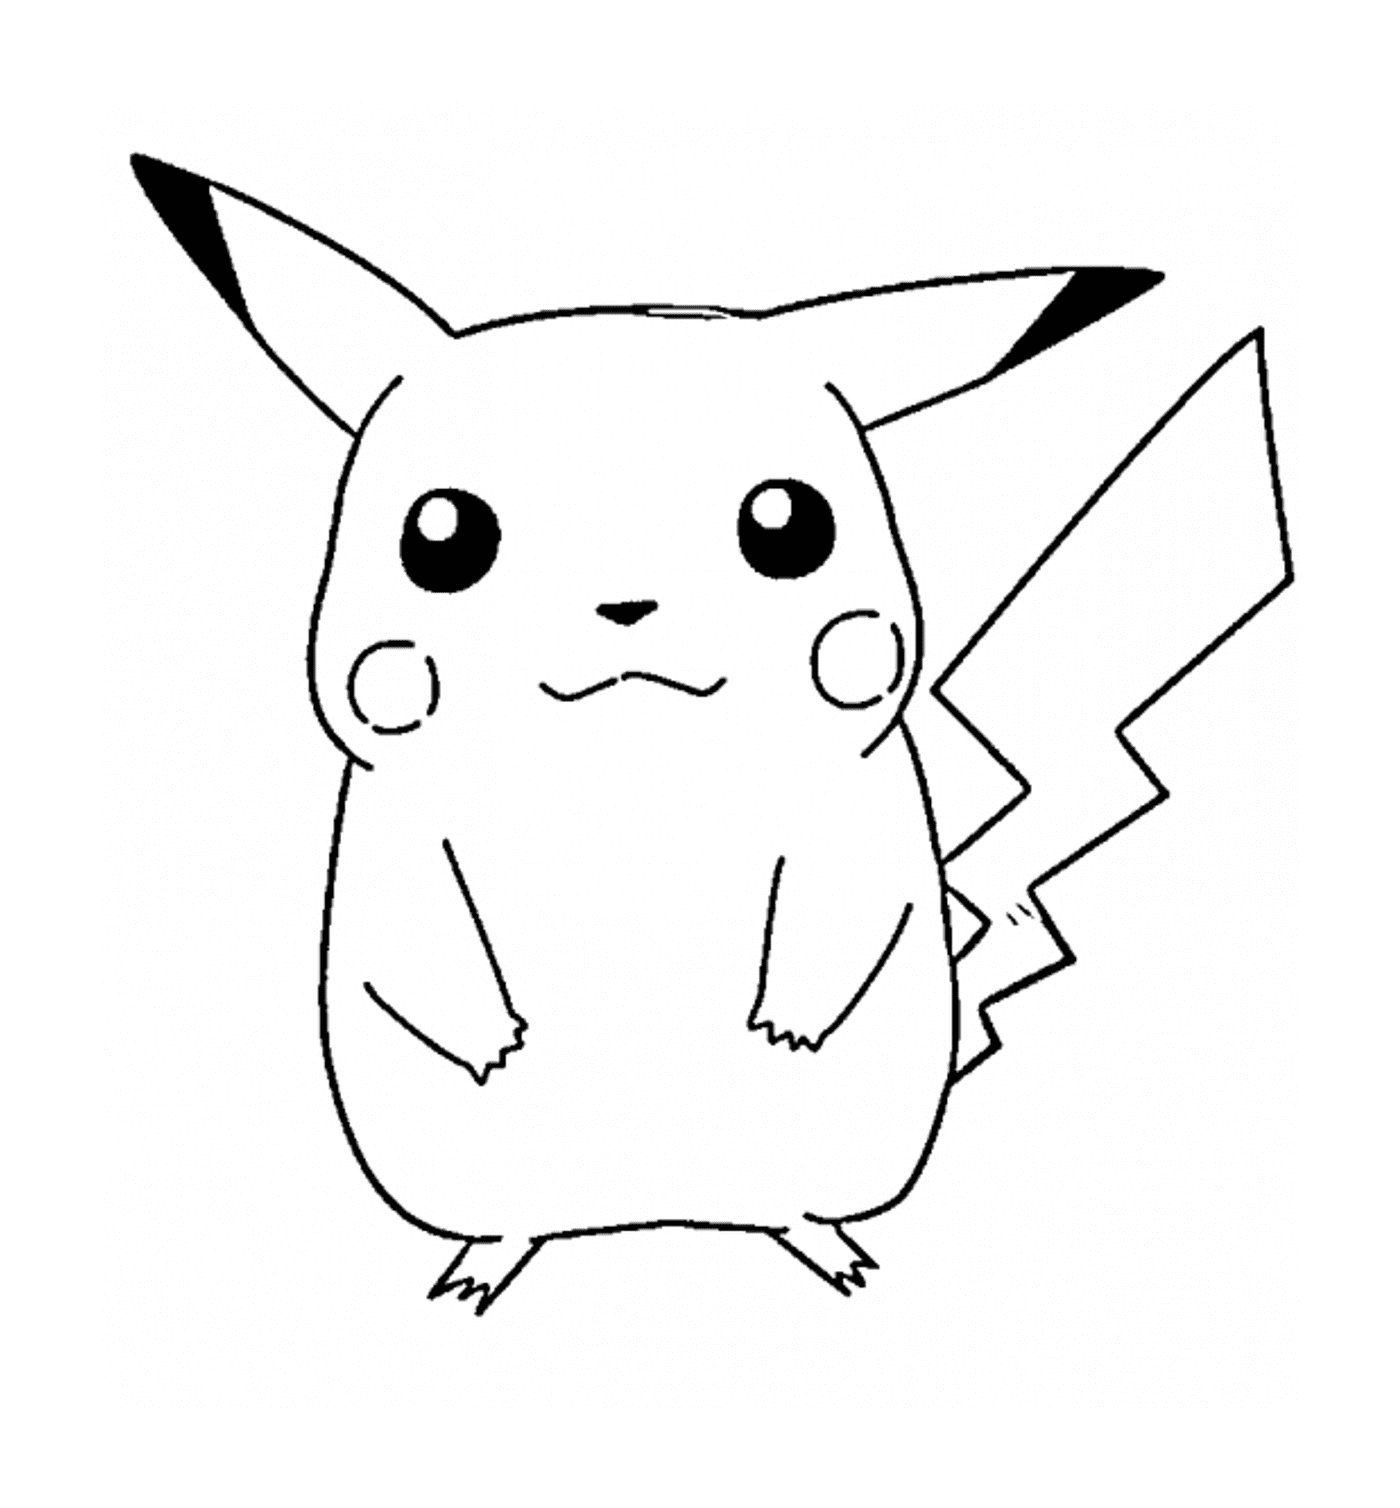  Pikachu 可爱的打印 